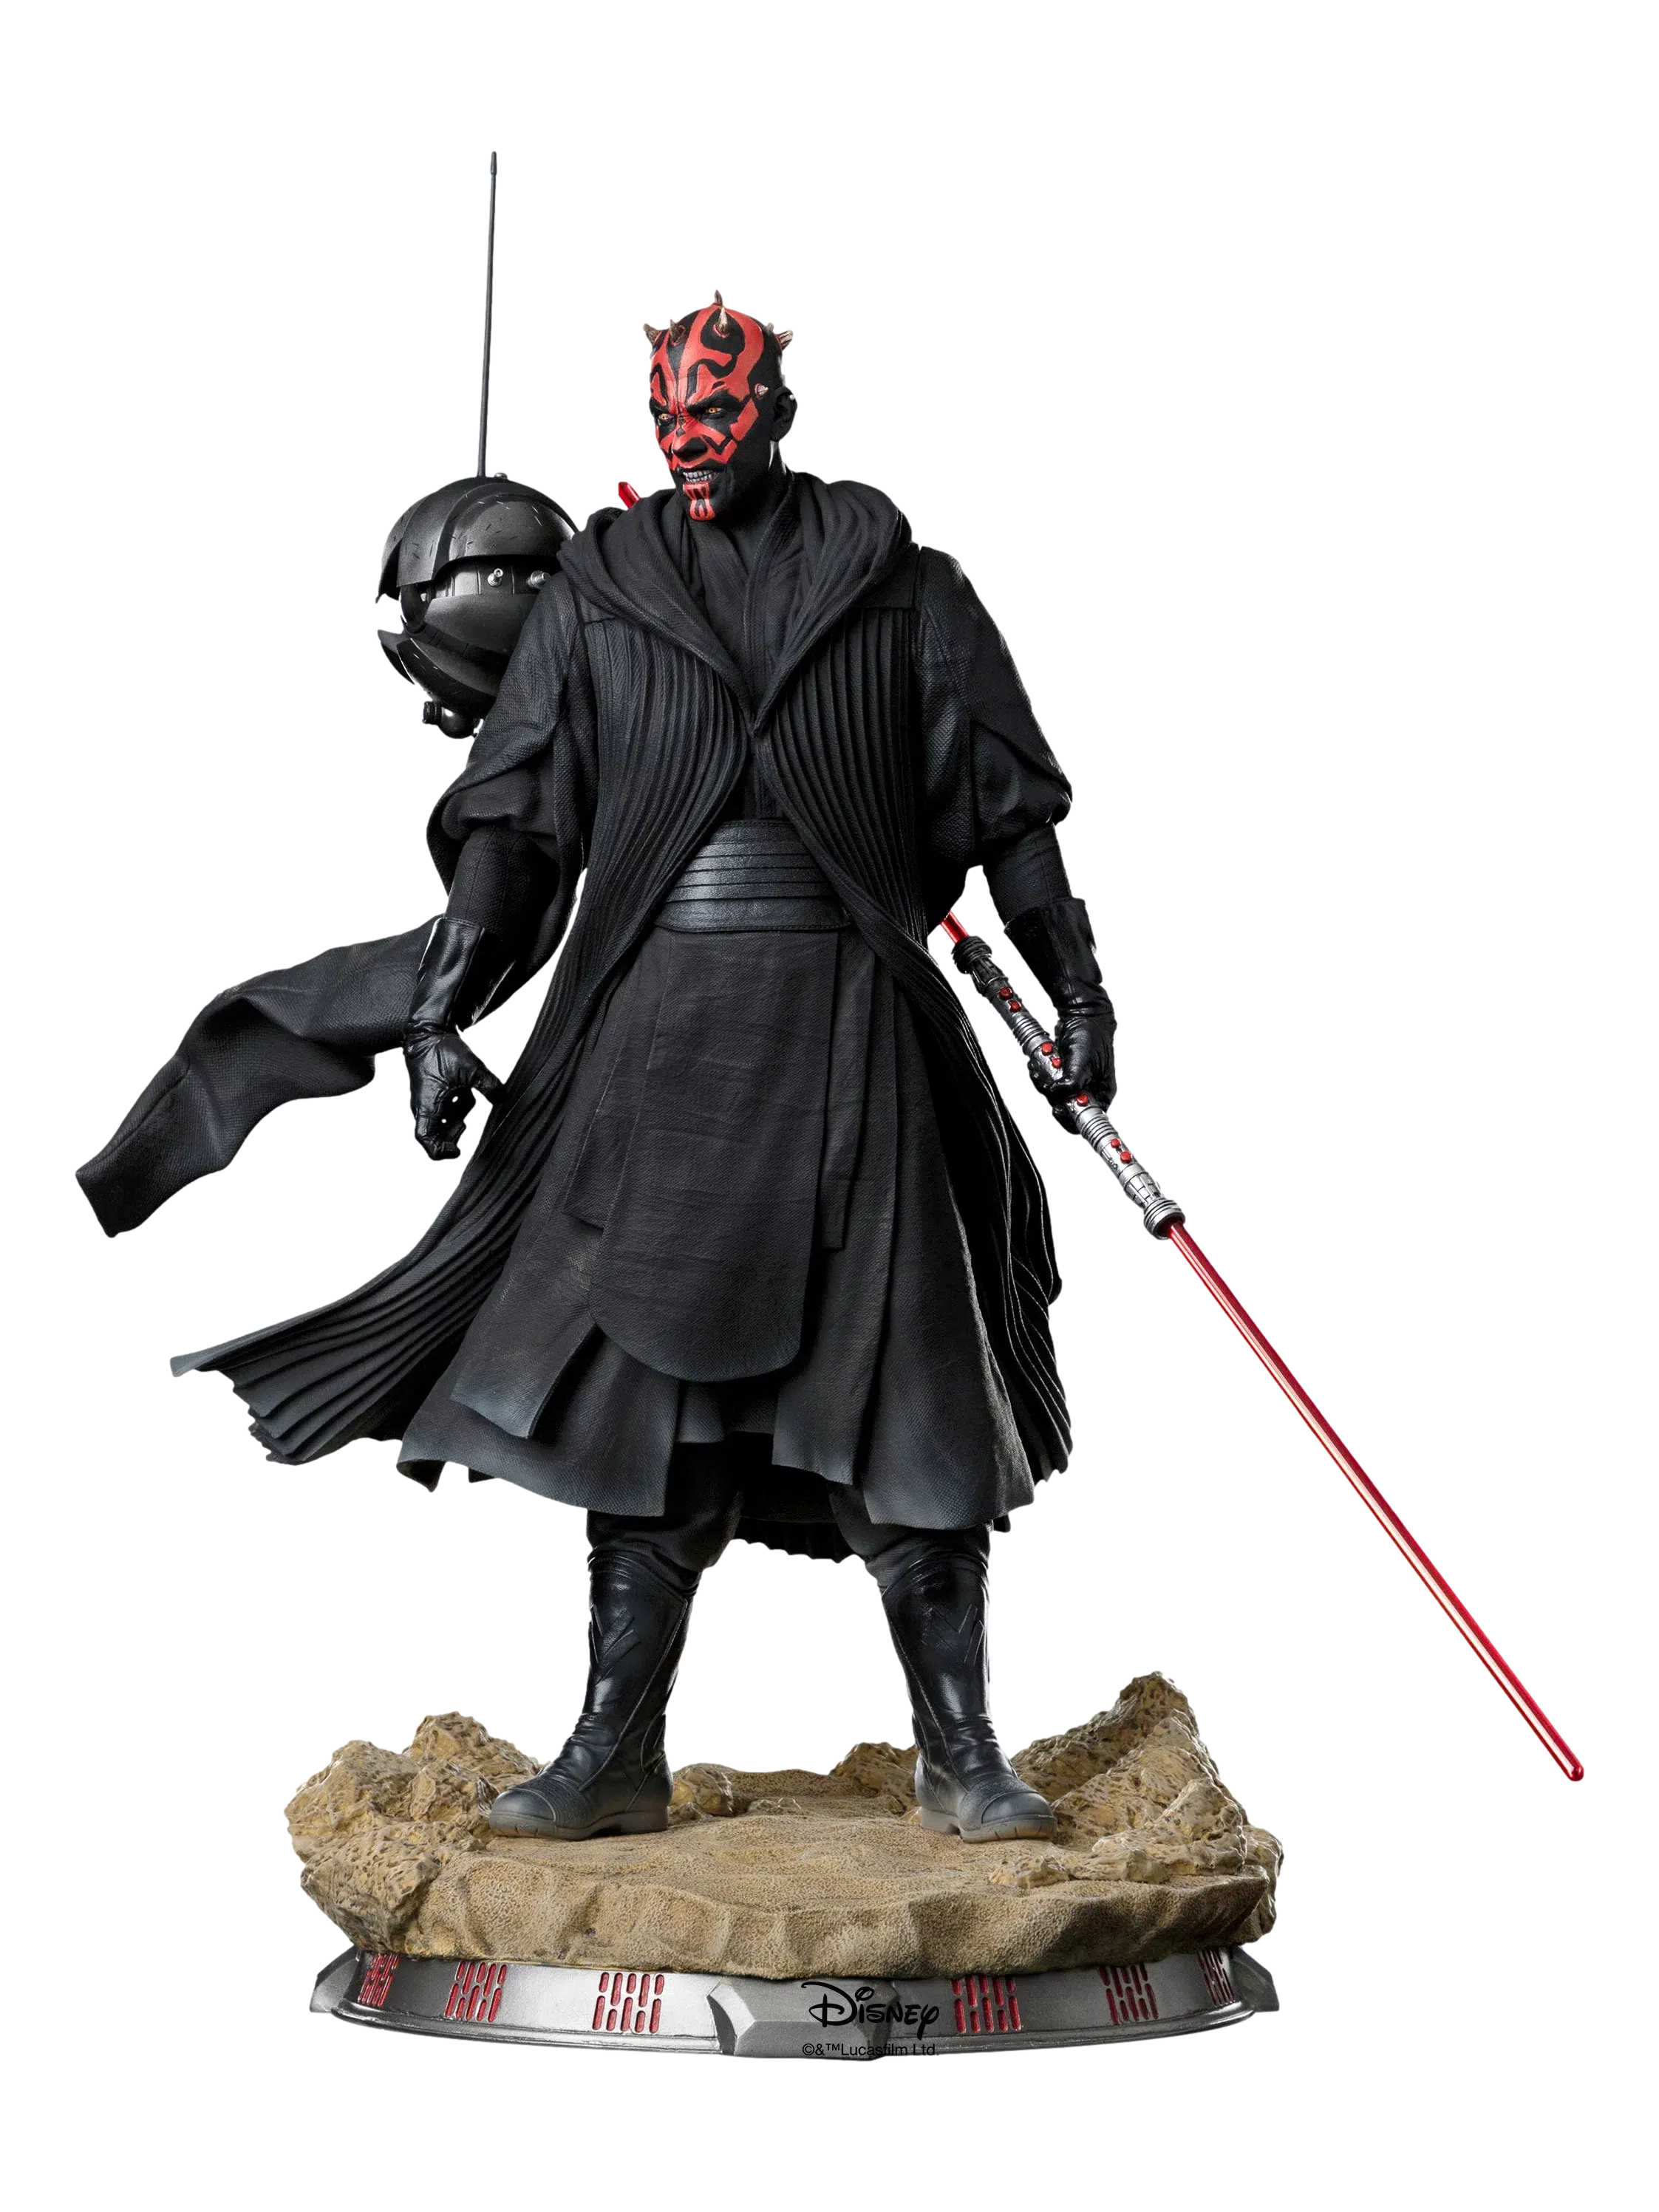 Darth Maul: Star Wars: The Phantom Menace: Quarter Scale Statue: Iron Studios